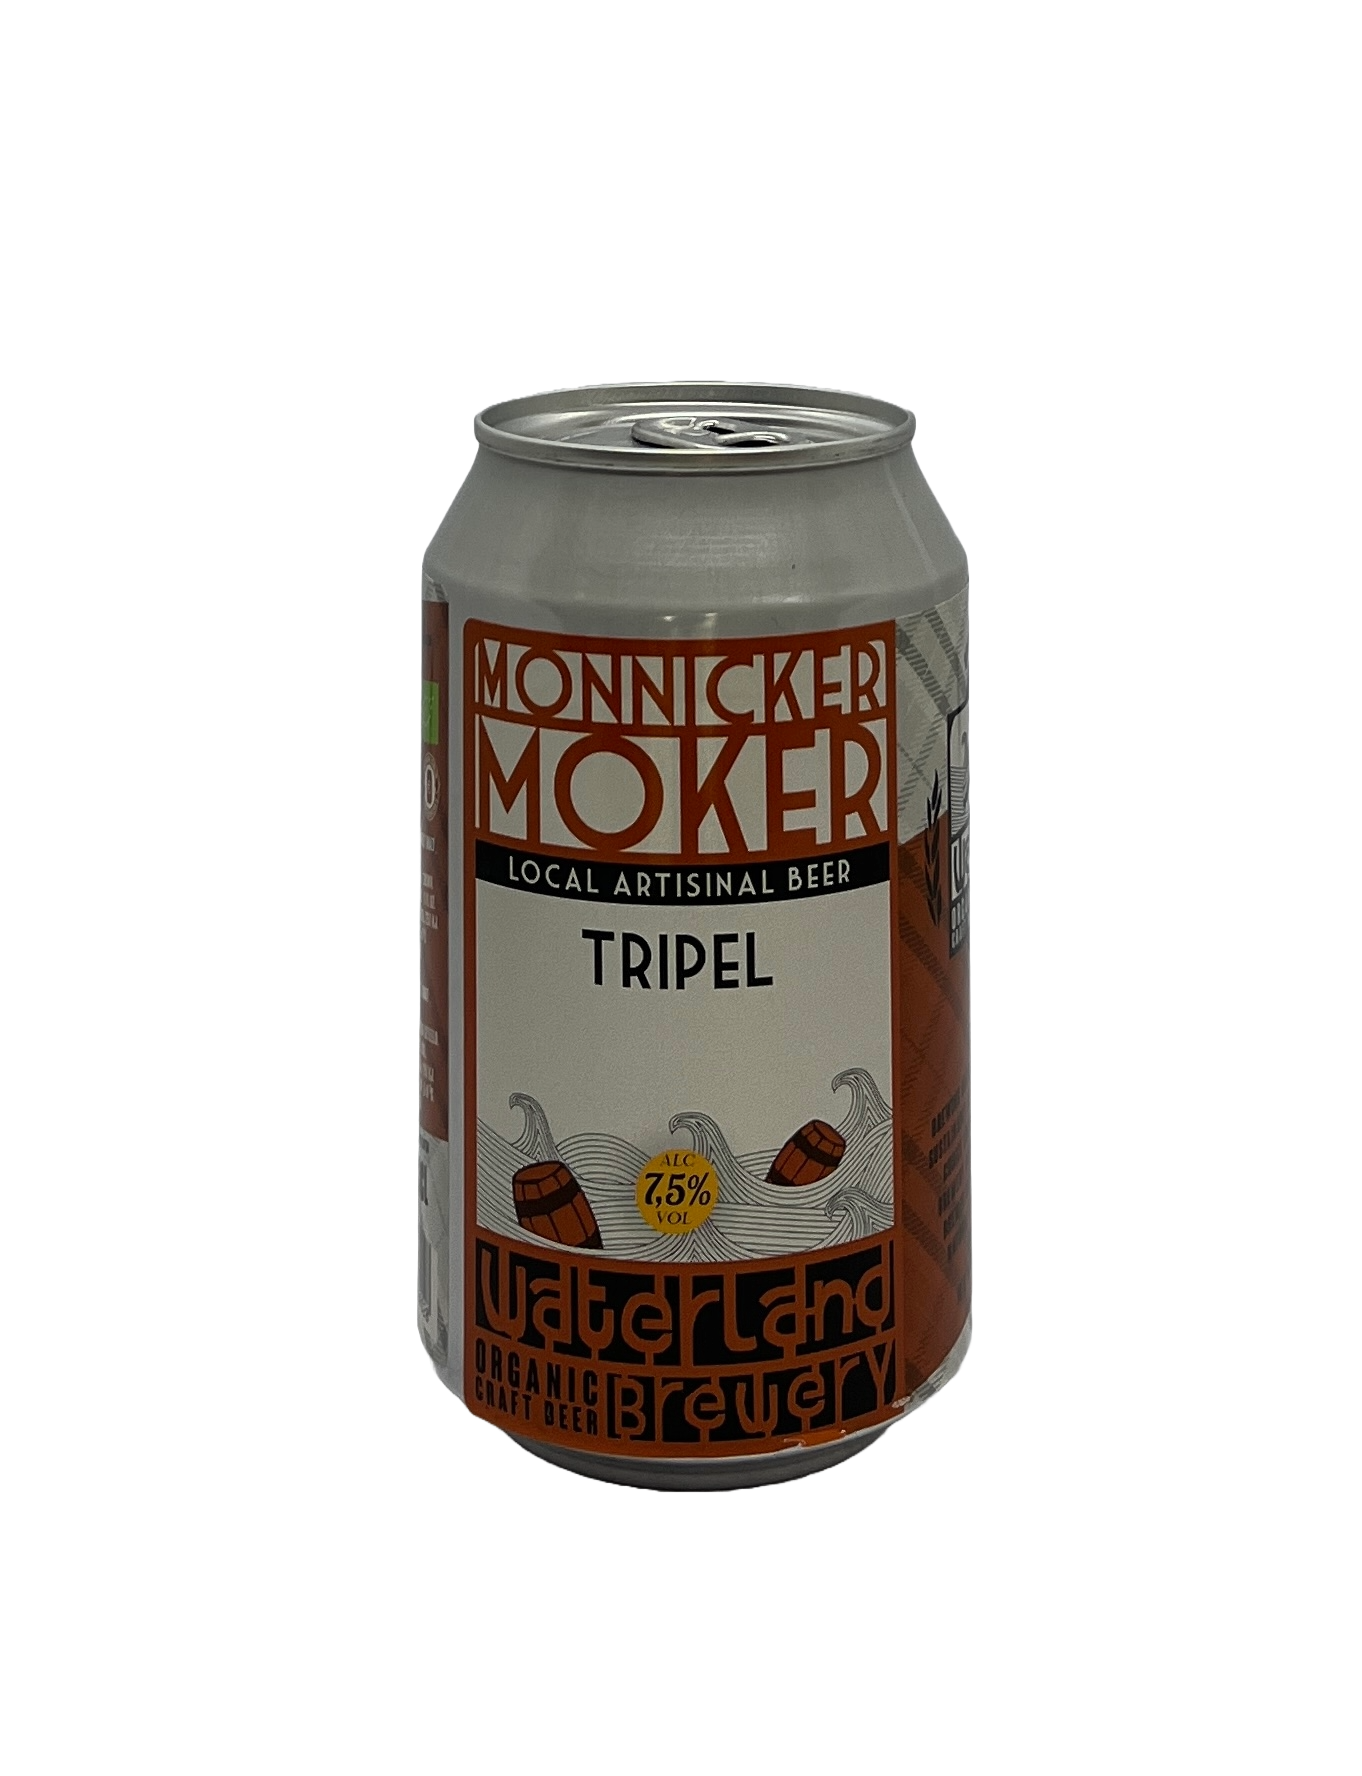 Waterland Brewery - Monnicker Moker